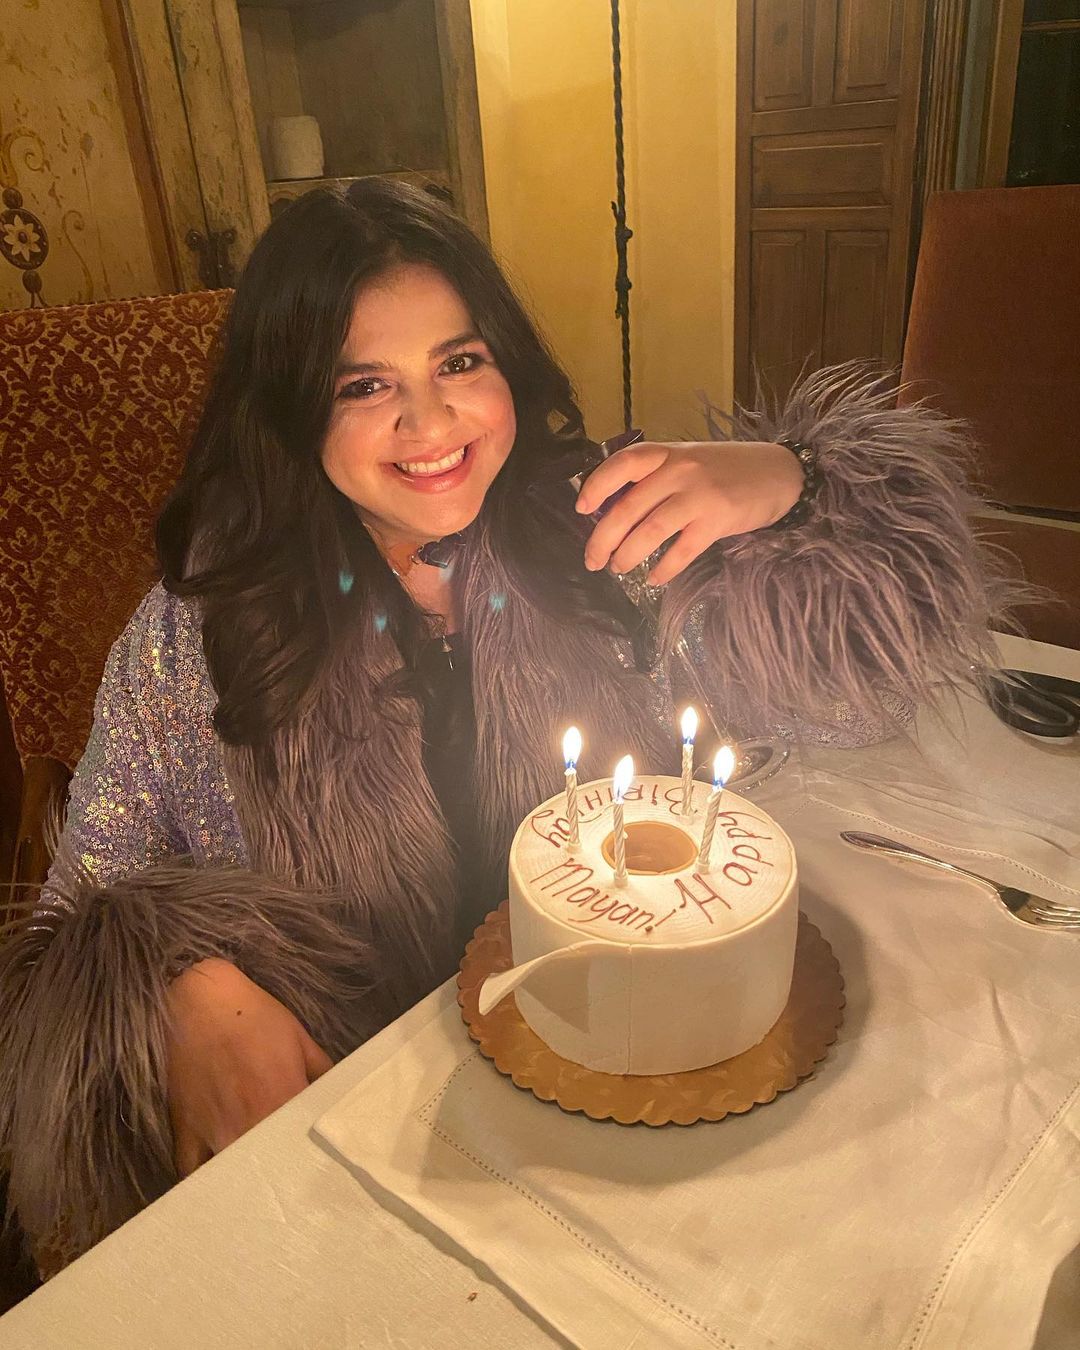 Mayan Lopez celebrating her 24th birthday in April 2020